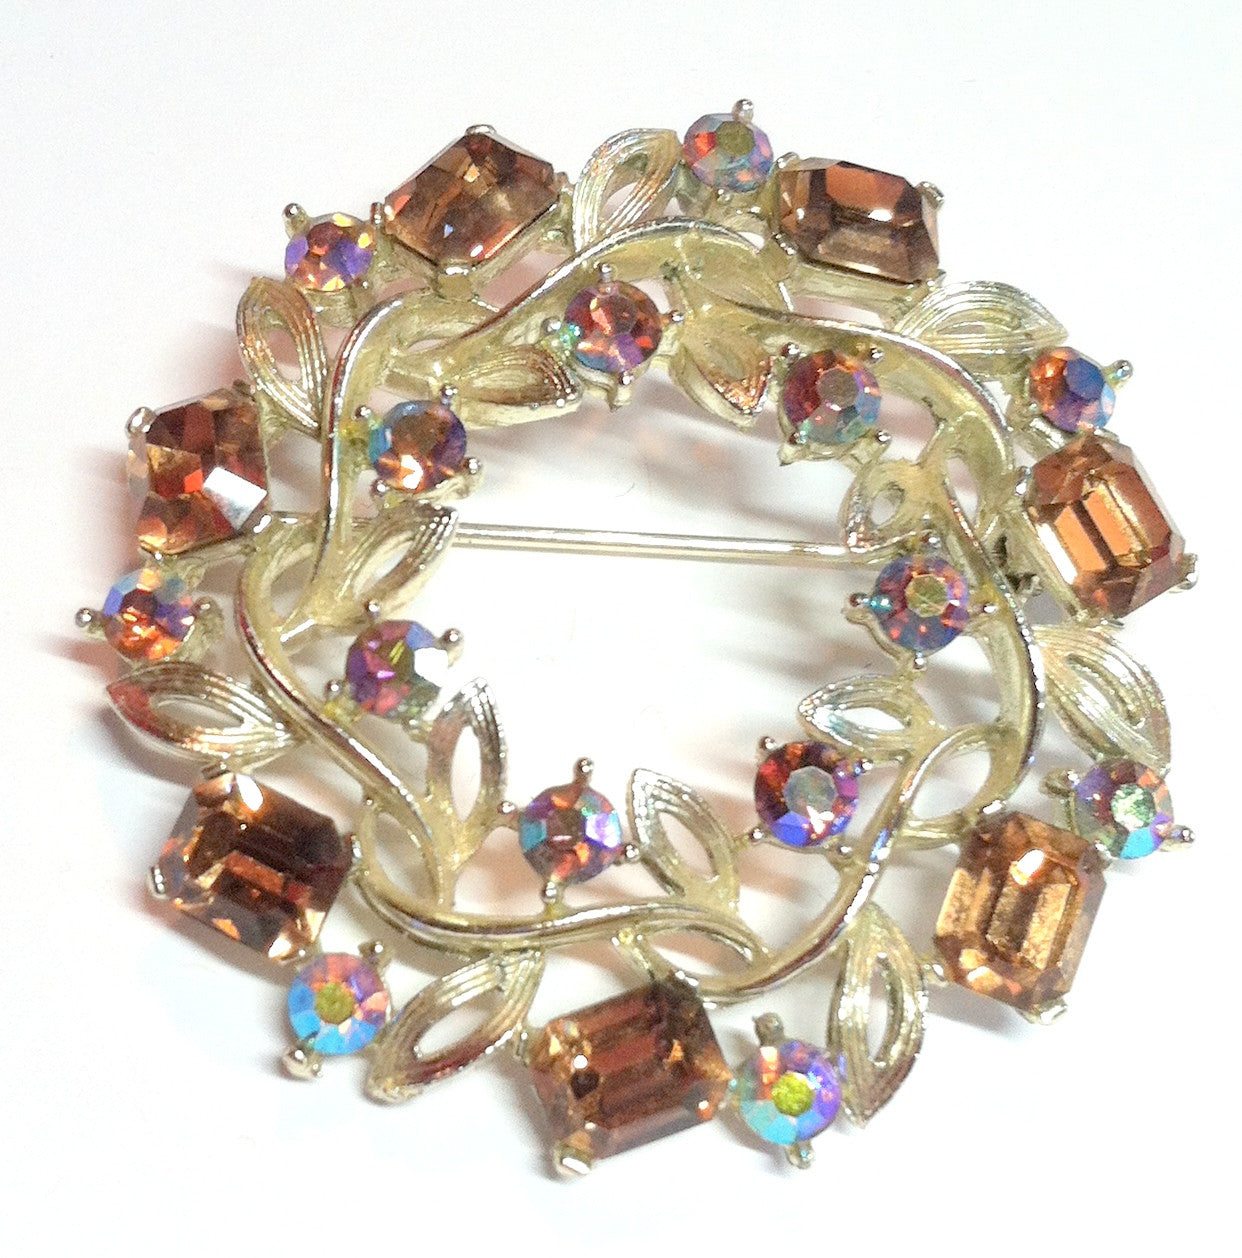 Wreath Shaped Brooch w/ Aurora Borealis Cystals circa 1960s Dorothea's Closet Vintage Jewelry